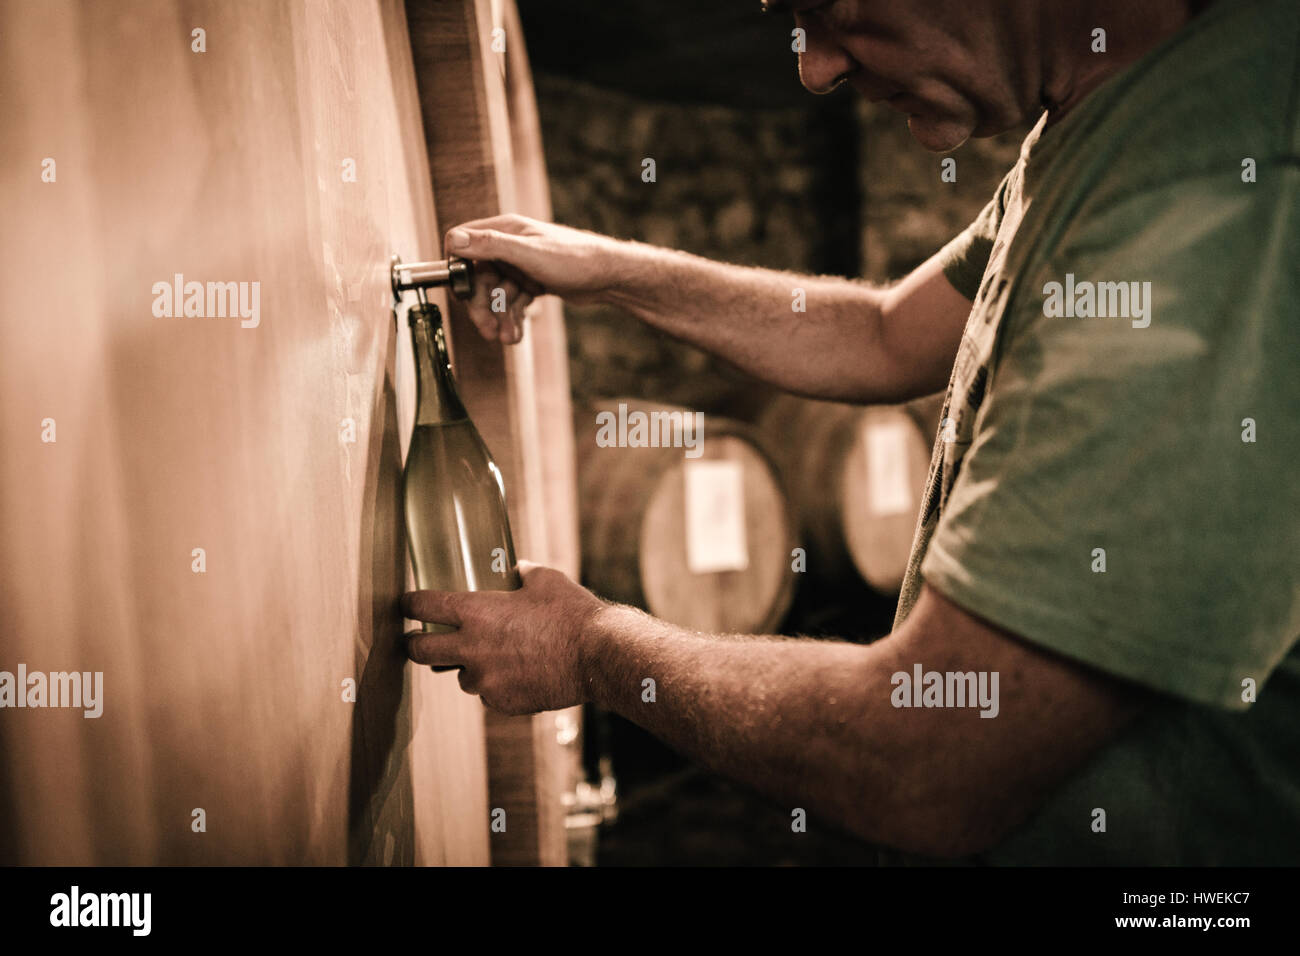 Winemaker filling wine bottle from cellar barrel Stock Photo